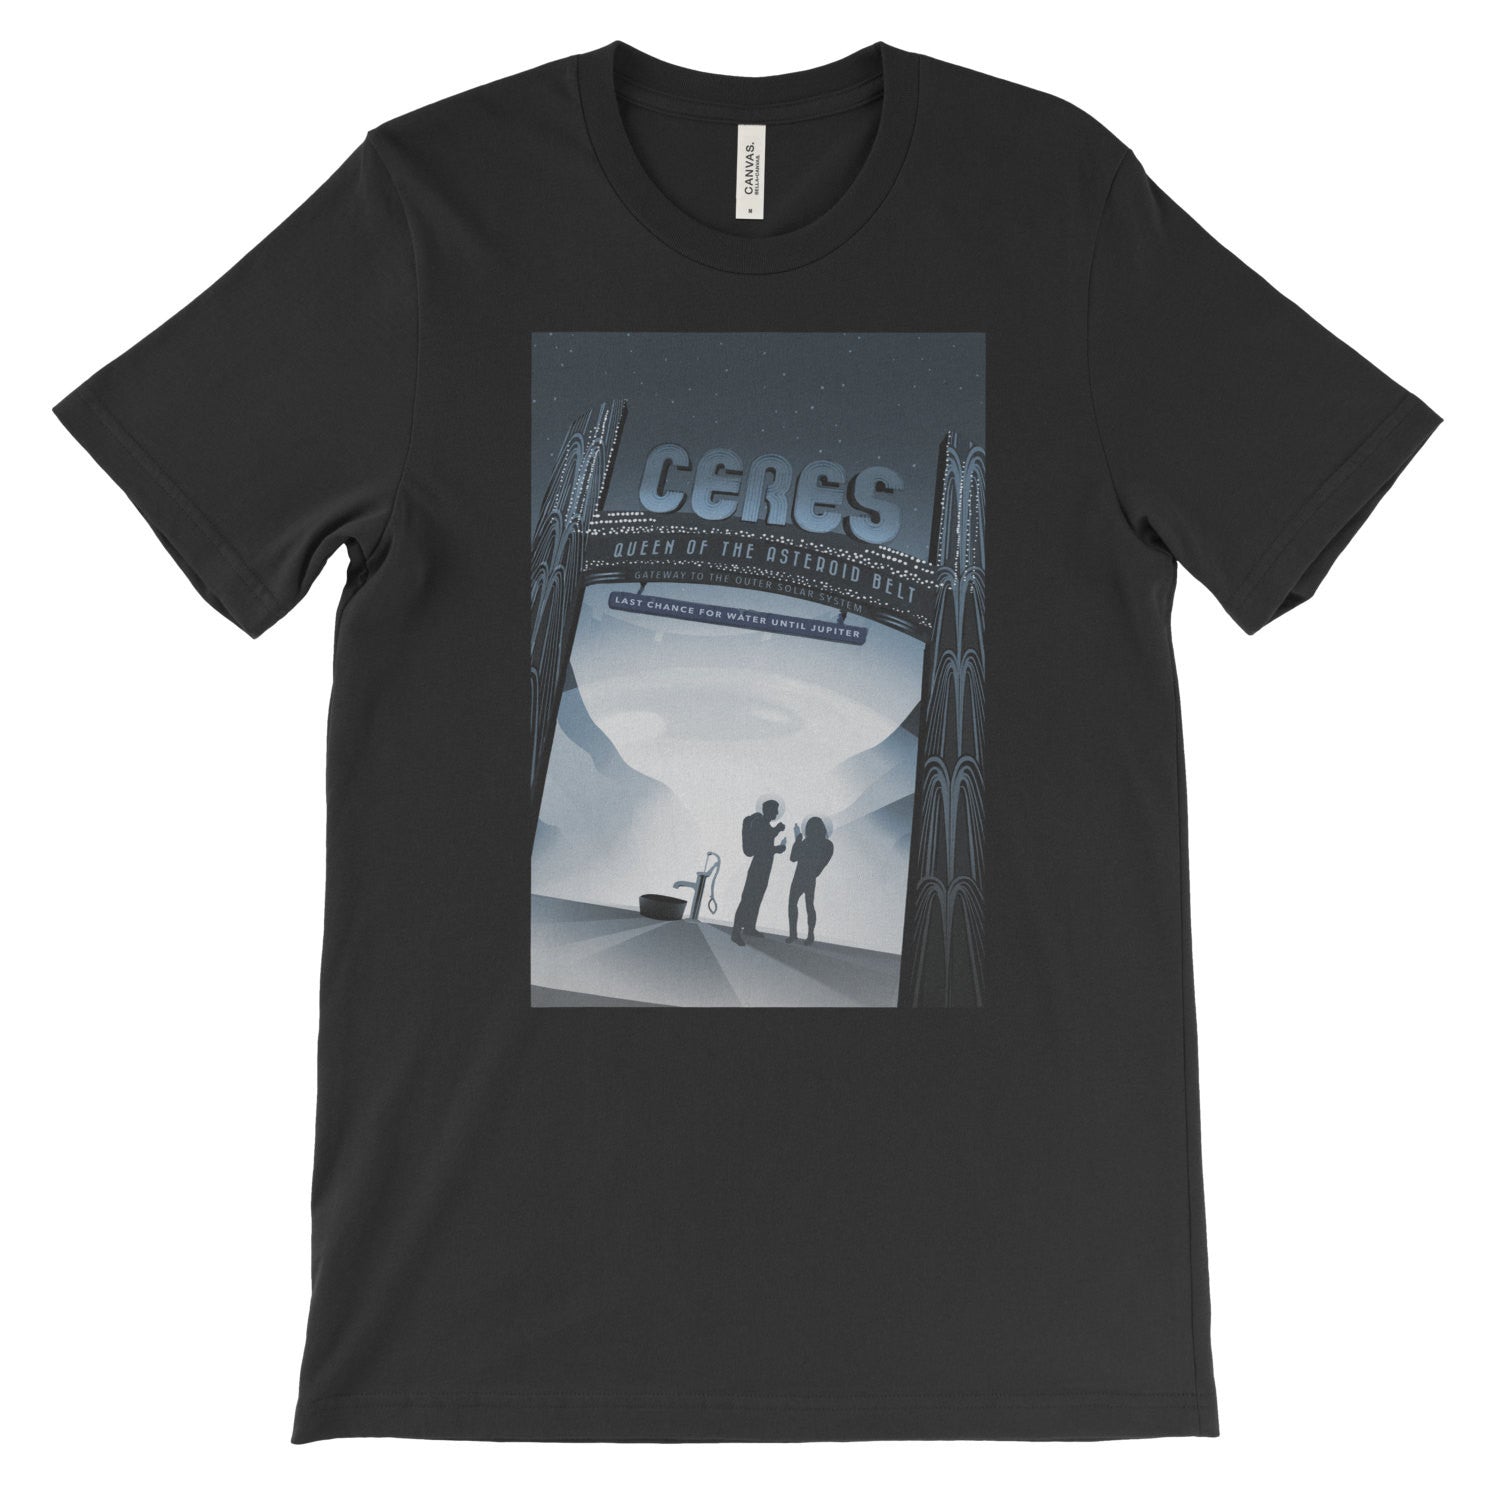 Ceres Poster Print T-Shirt from NASA - Mighty Circus